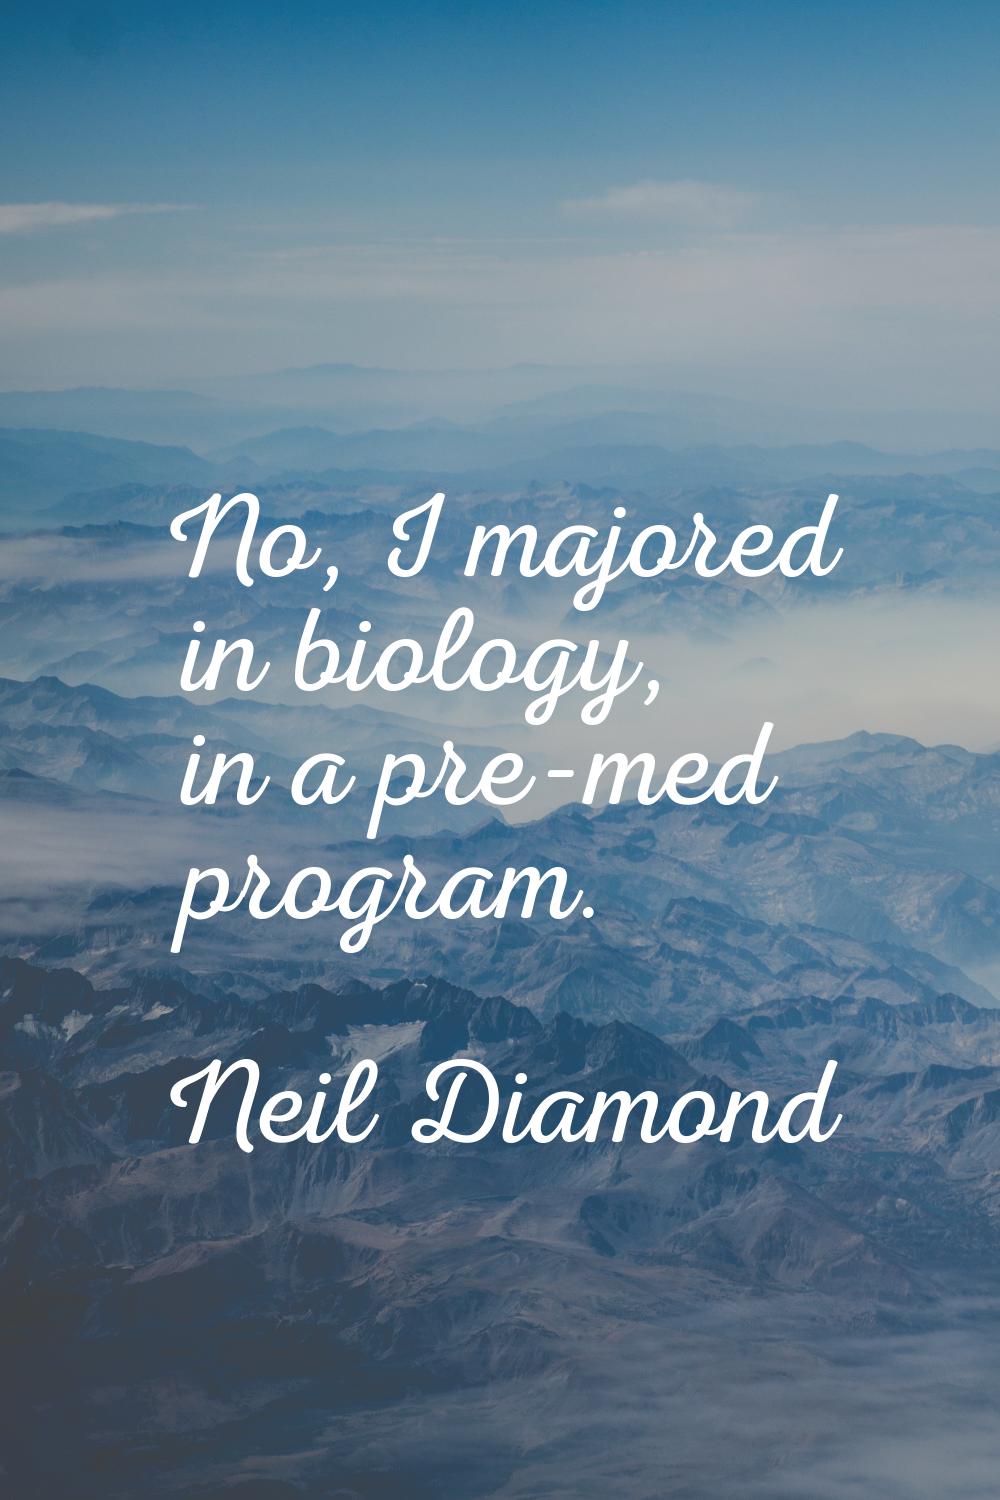 No, I majored in biology, in a pre-med program.